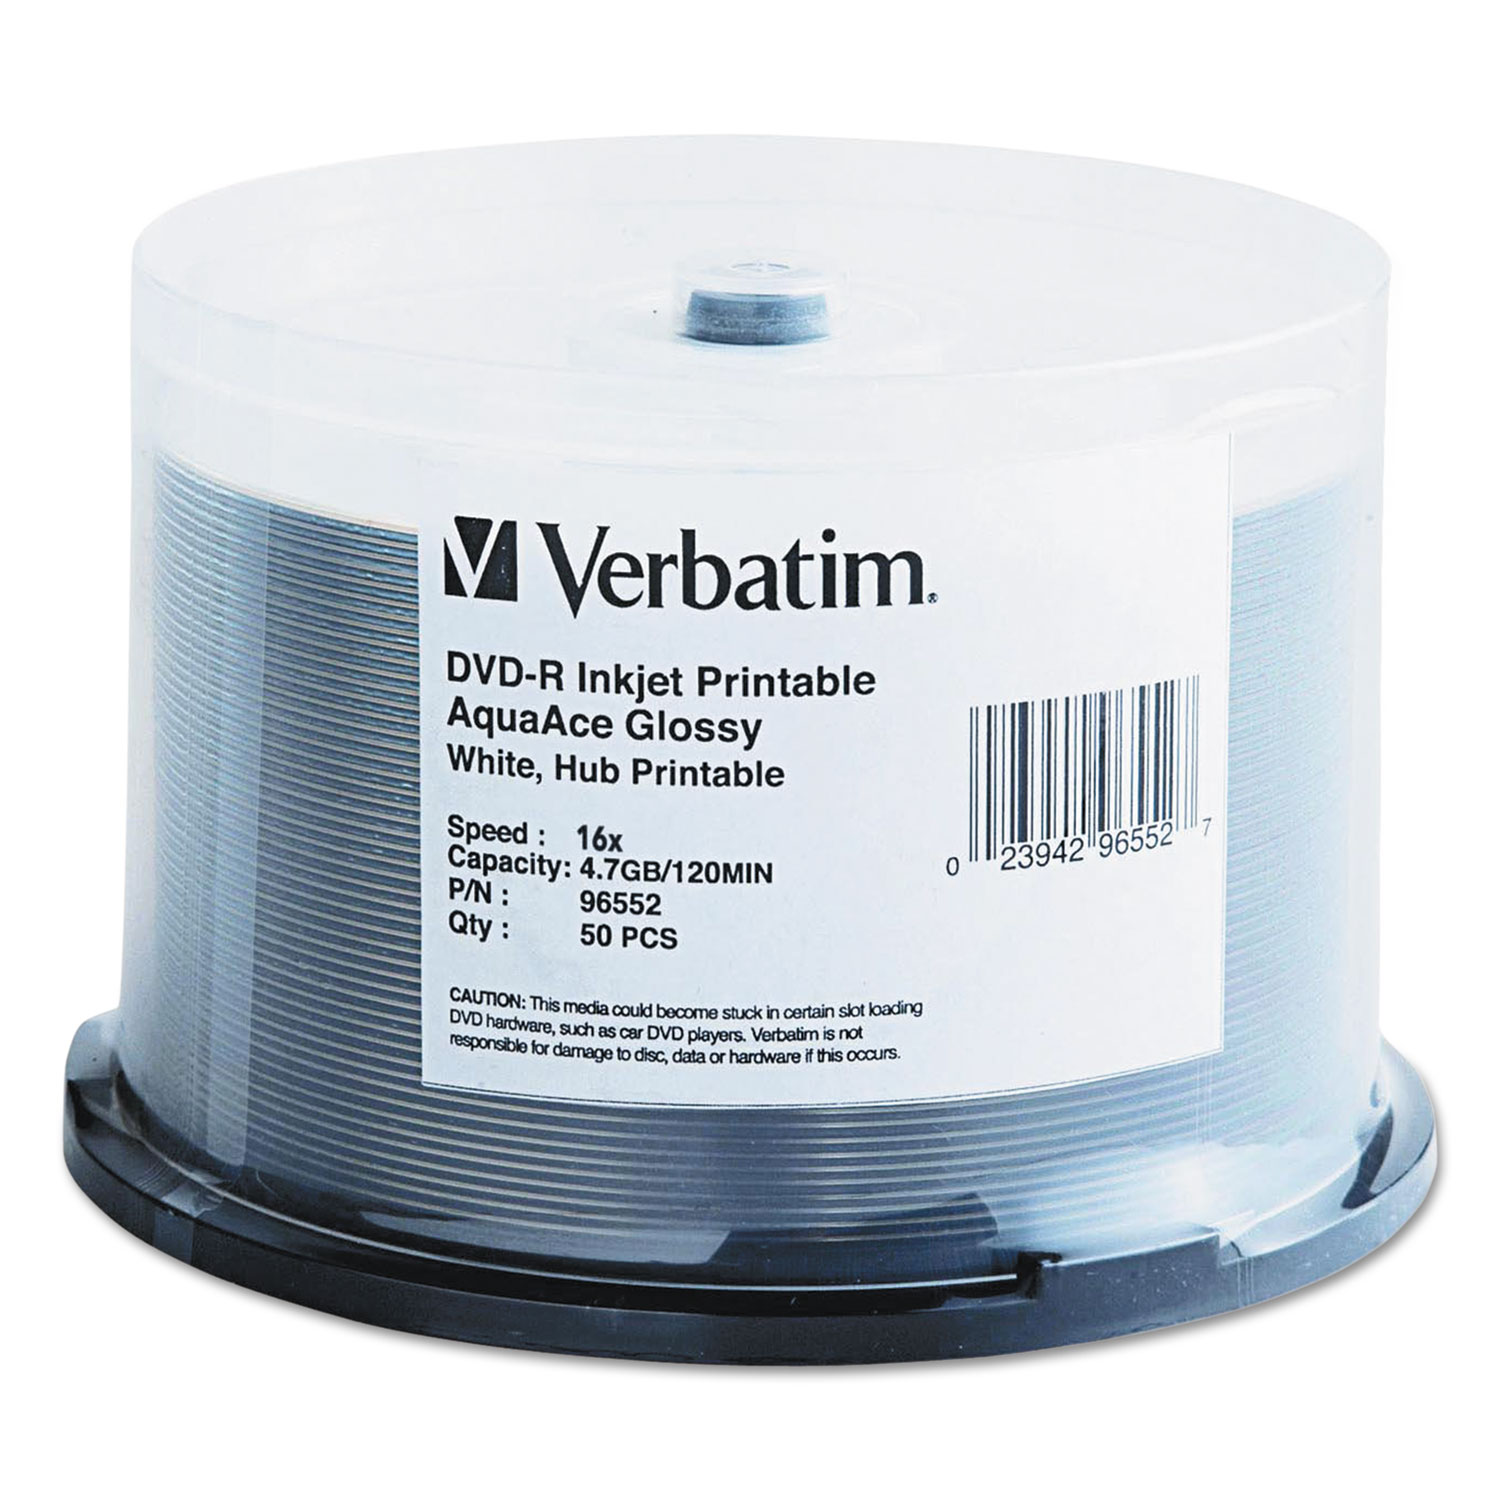  Verbatim 96552 AquaAce DVD-R, 4.7GB, 16X, Glossy Inkjet Printable, Hub Printable, 50/PK Spindle (VER96552) 